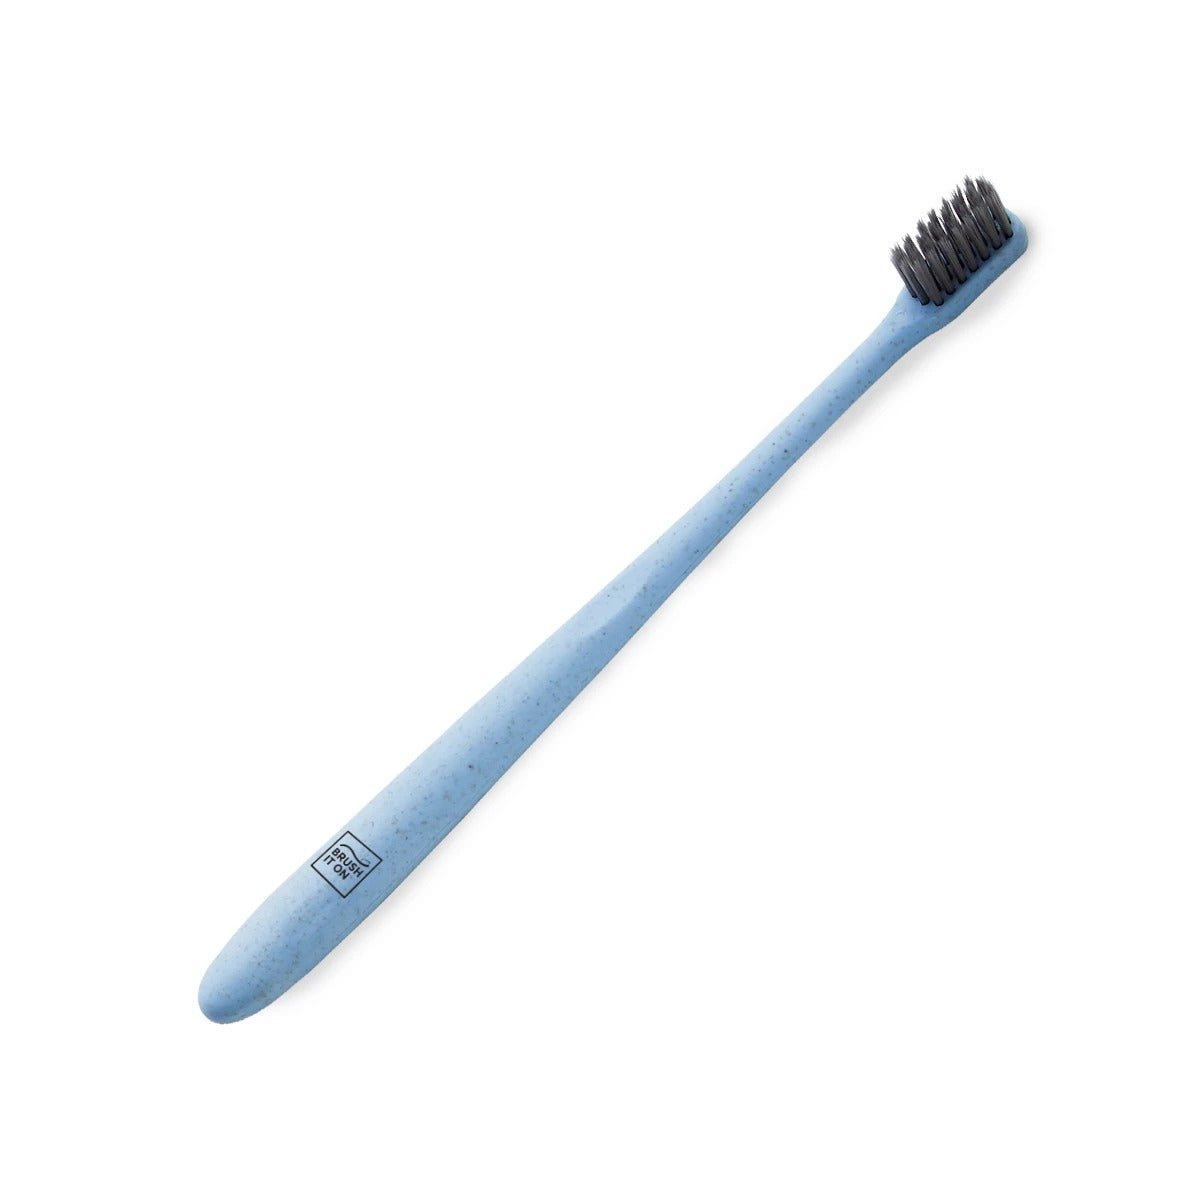 Brush It On Wheat Straw Toothbrush